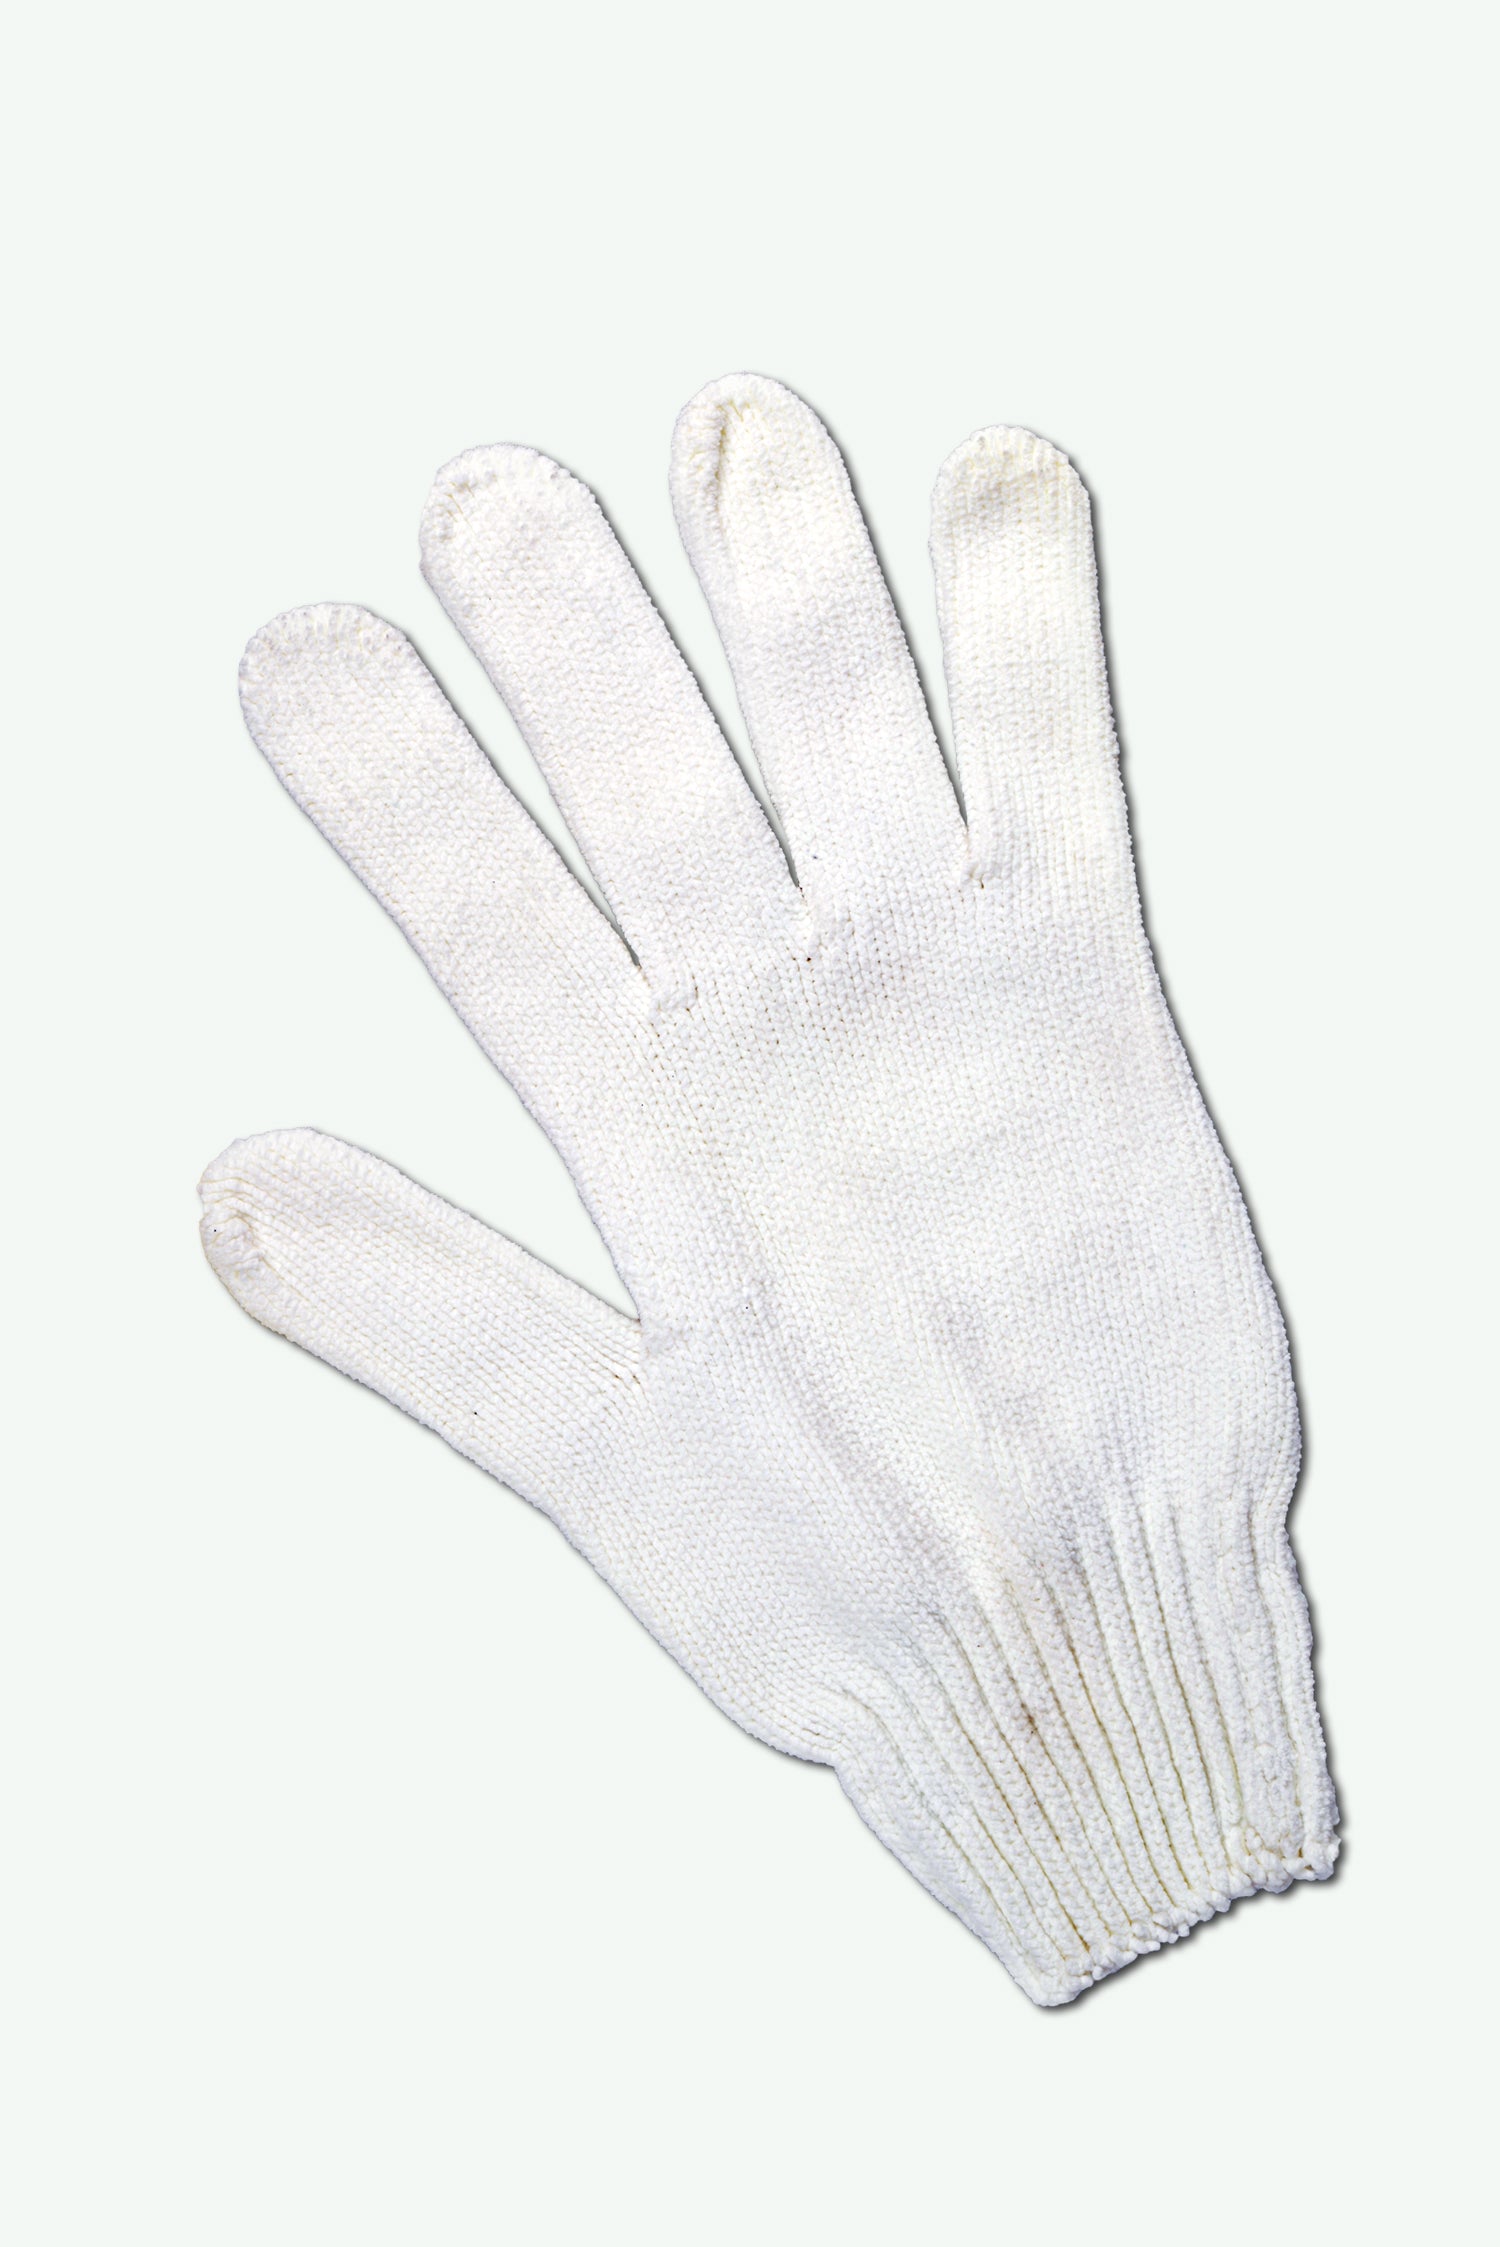 Big Micro Fiber Single Glove for Dusting or Wet Cleaning - 1022 - BULKMART  - BULKMART - Online Shop for House Hold Items